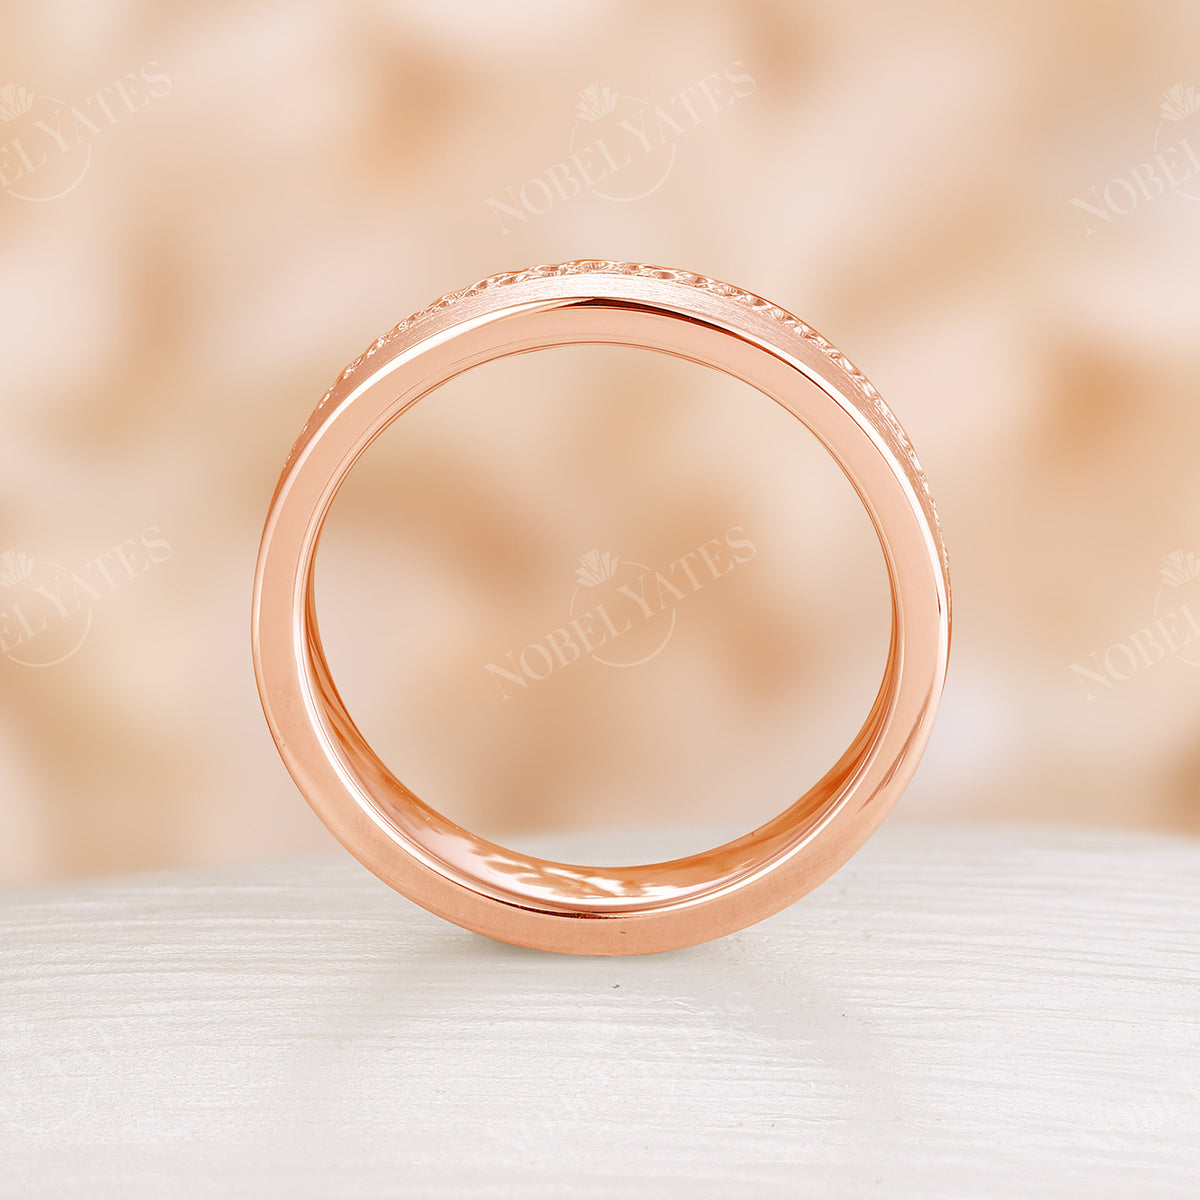 Unique Hammered Plain Wedding Couple Ring Rose Gold